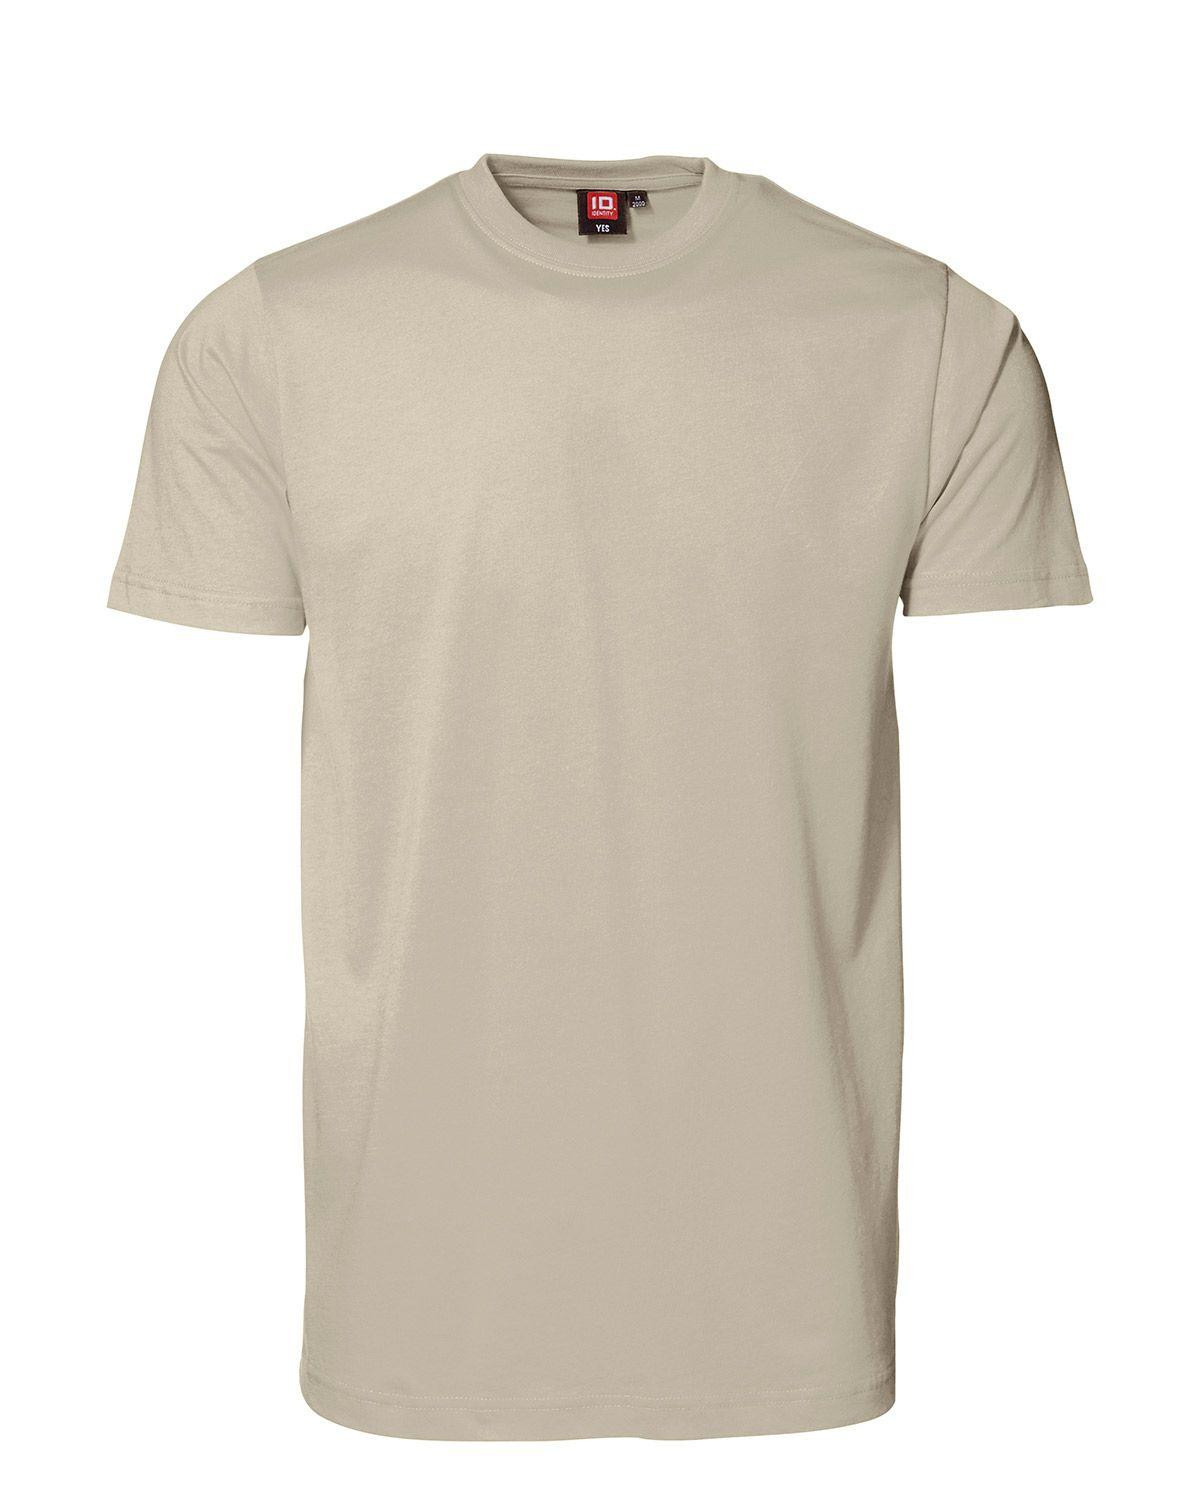 ID YES T-shirt (Khaki, XL)